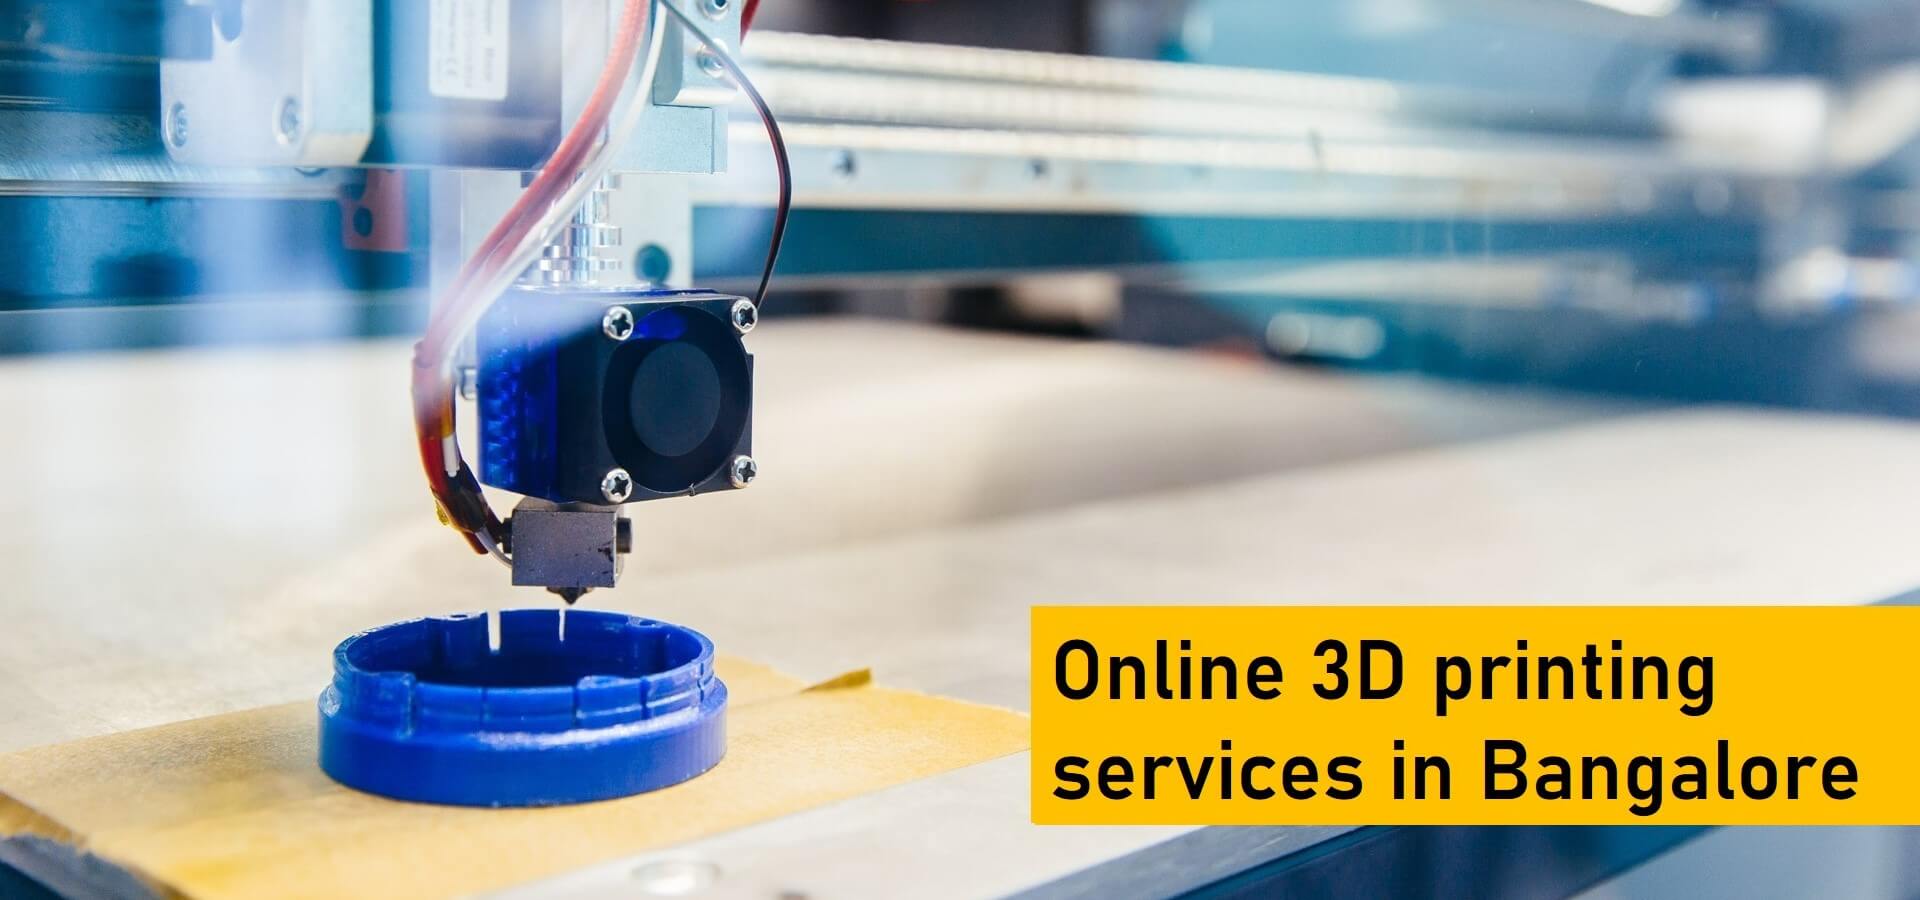 Services d'impression 3D à Bangkok - Online 3D Printing Services In Bangalore